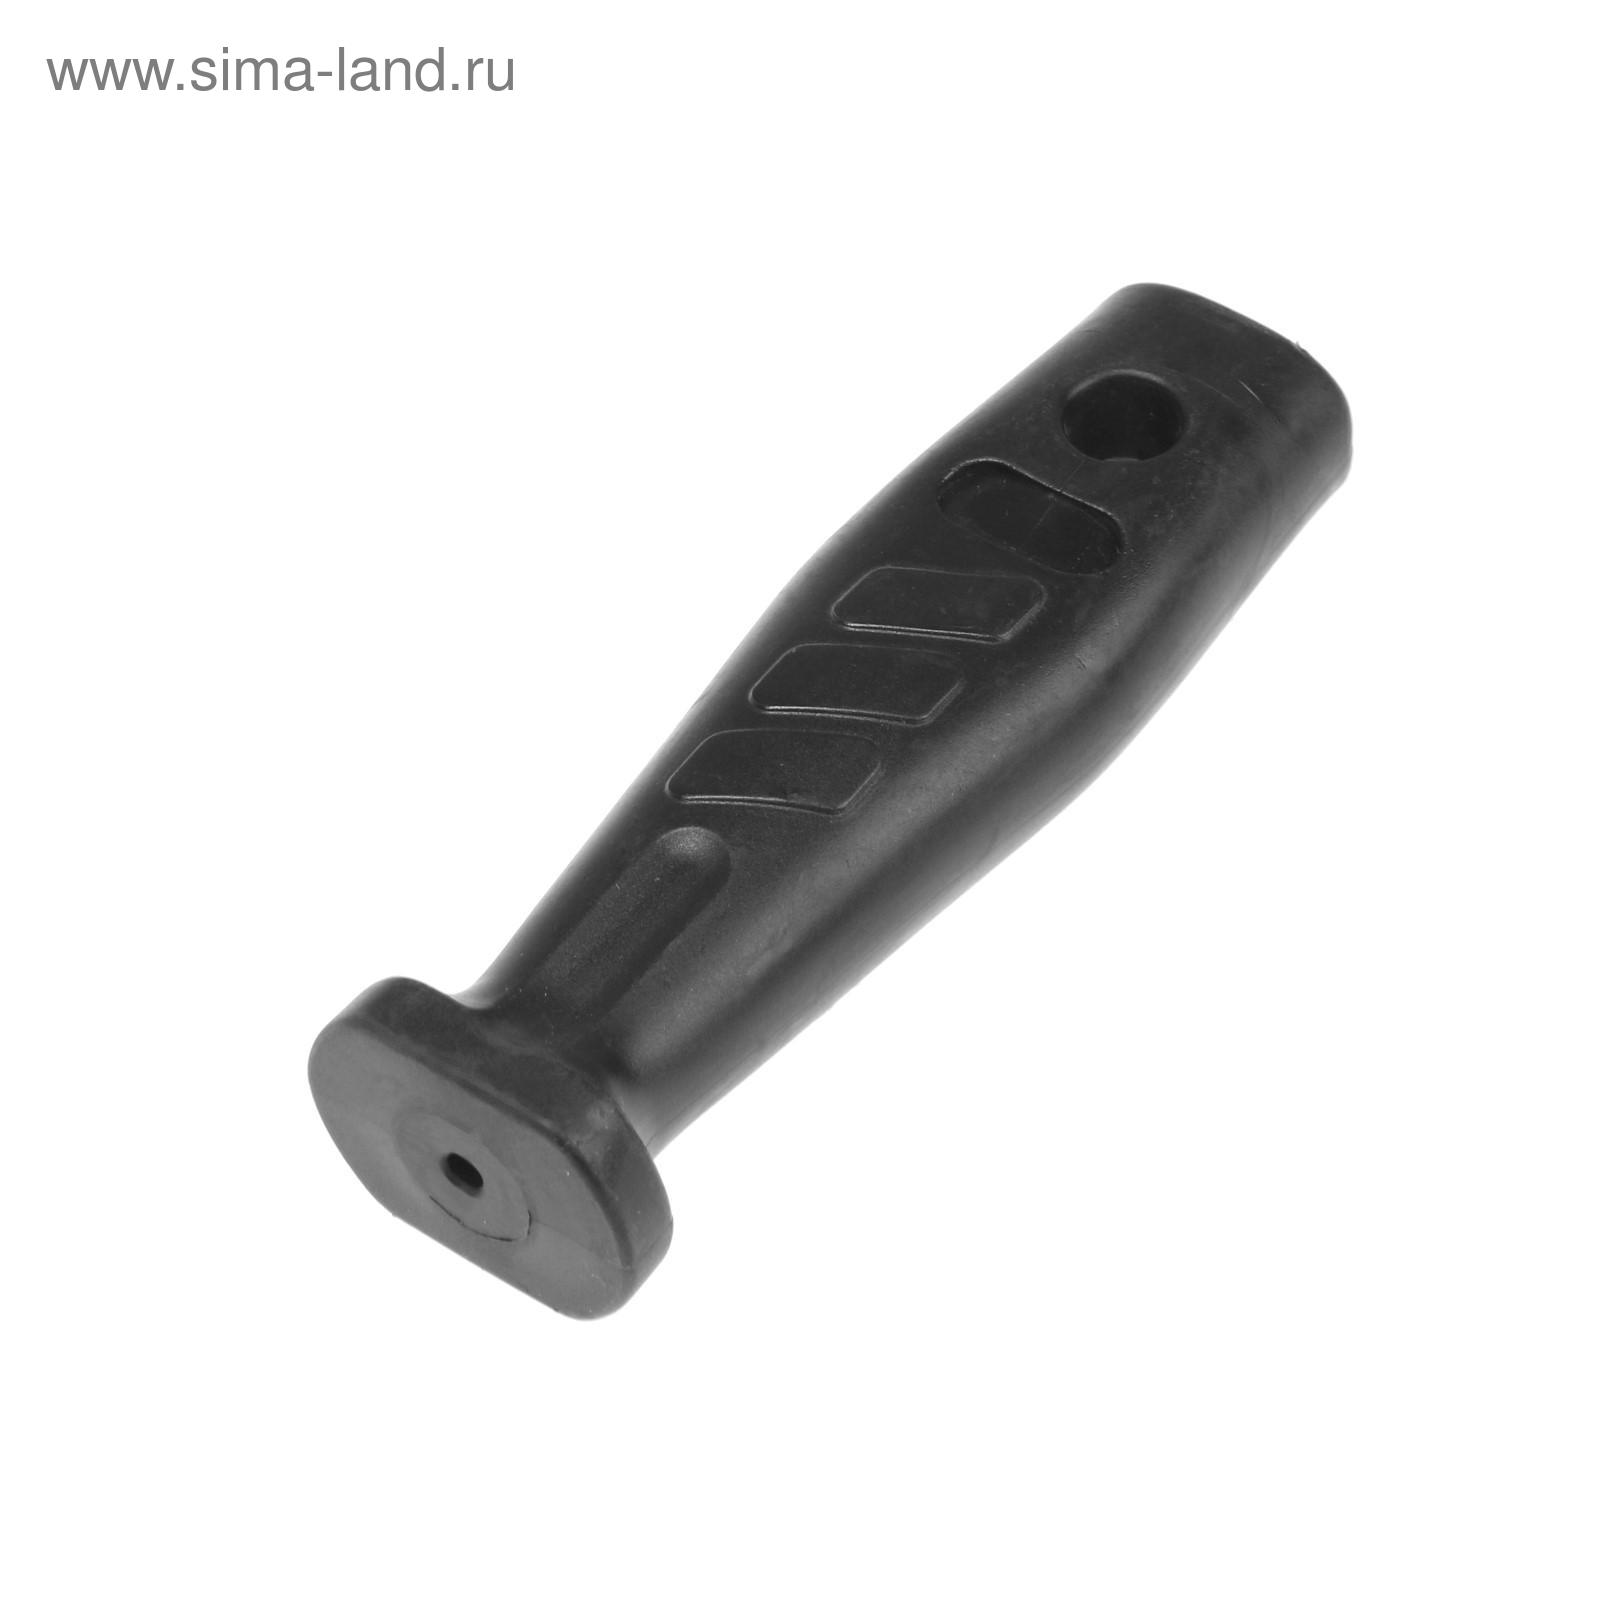 Рукоятка для напильника USP 42773, пластик, 100 мм (5460118) - Купить .